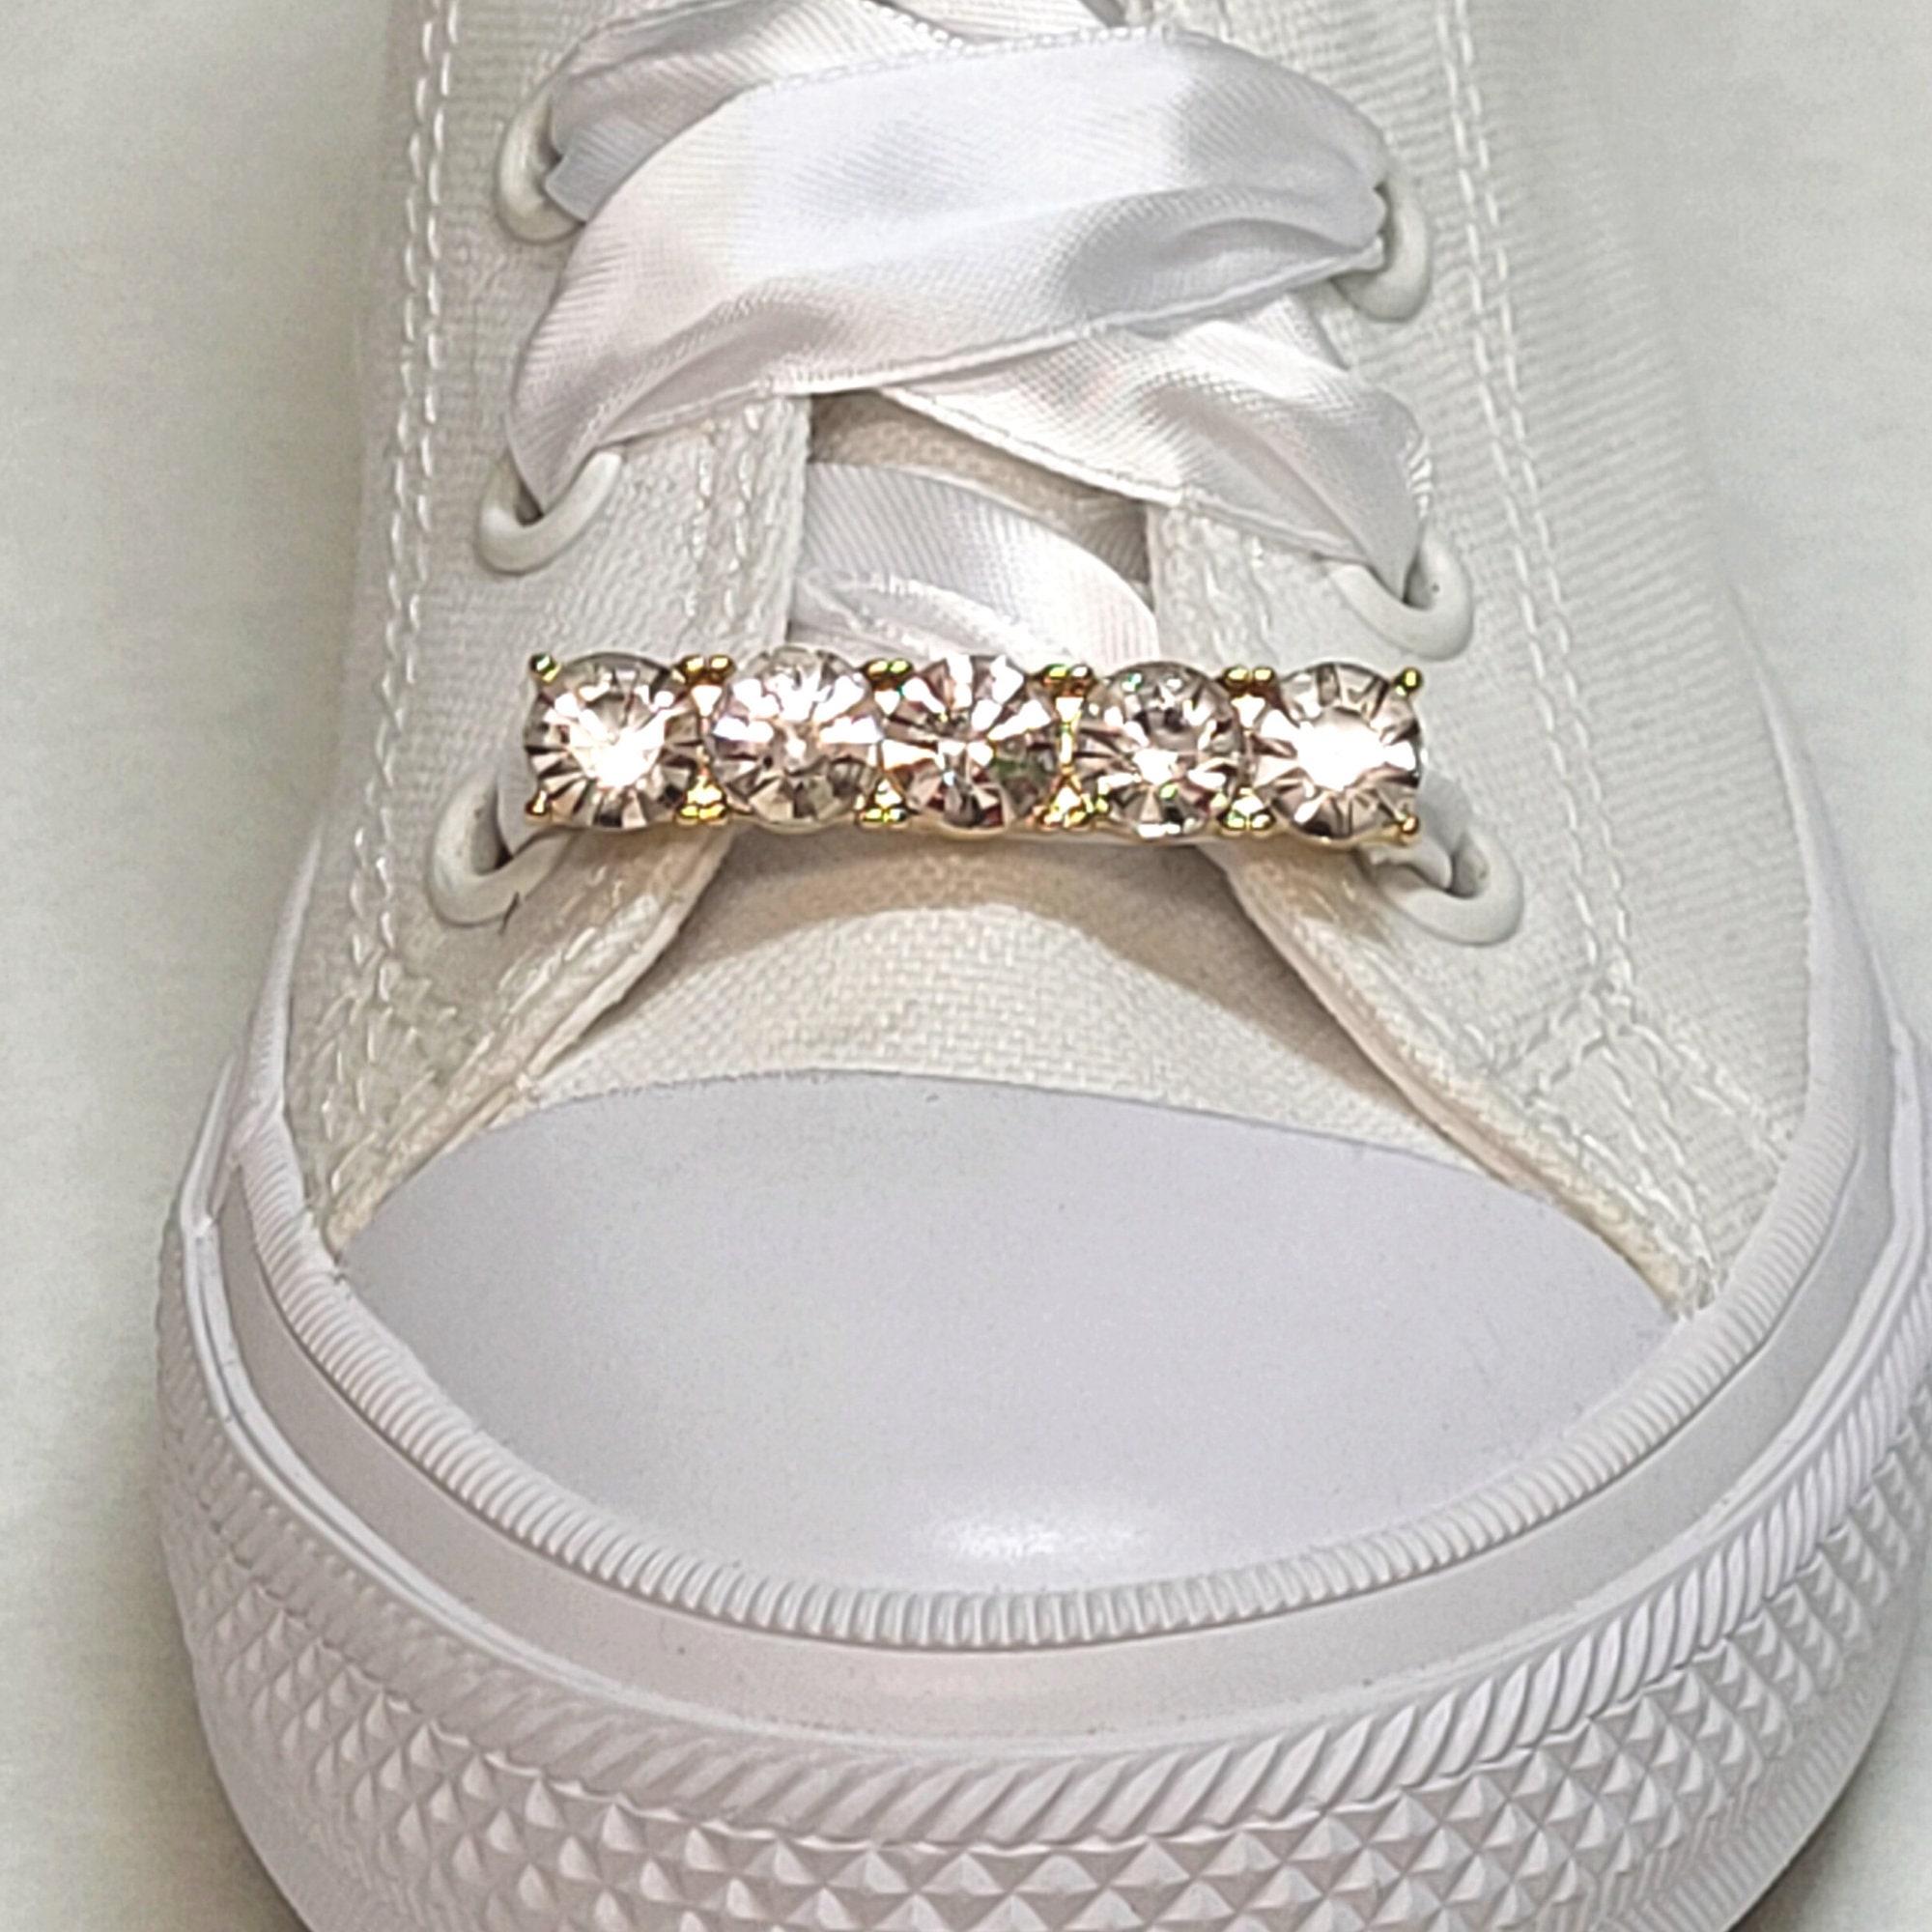 yali rhinestone shoe laces for women's